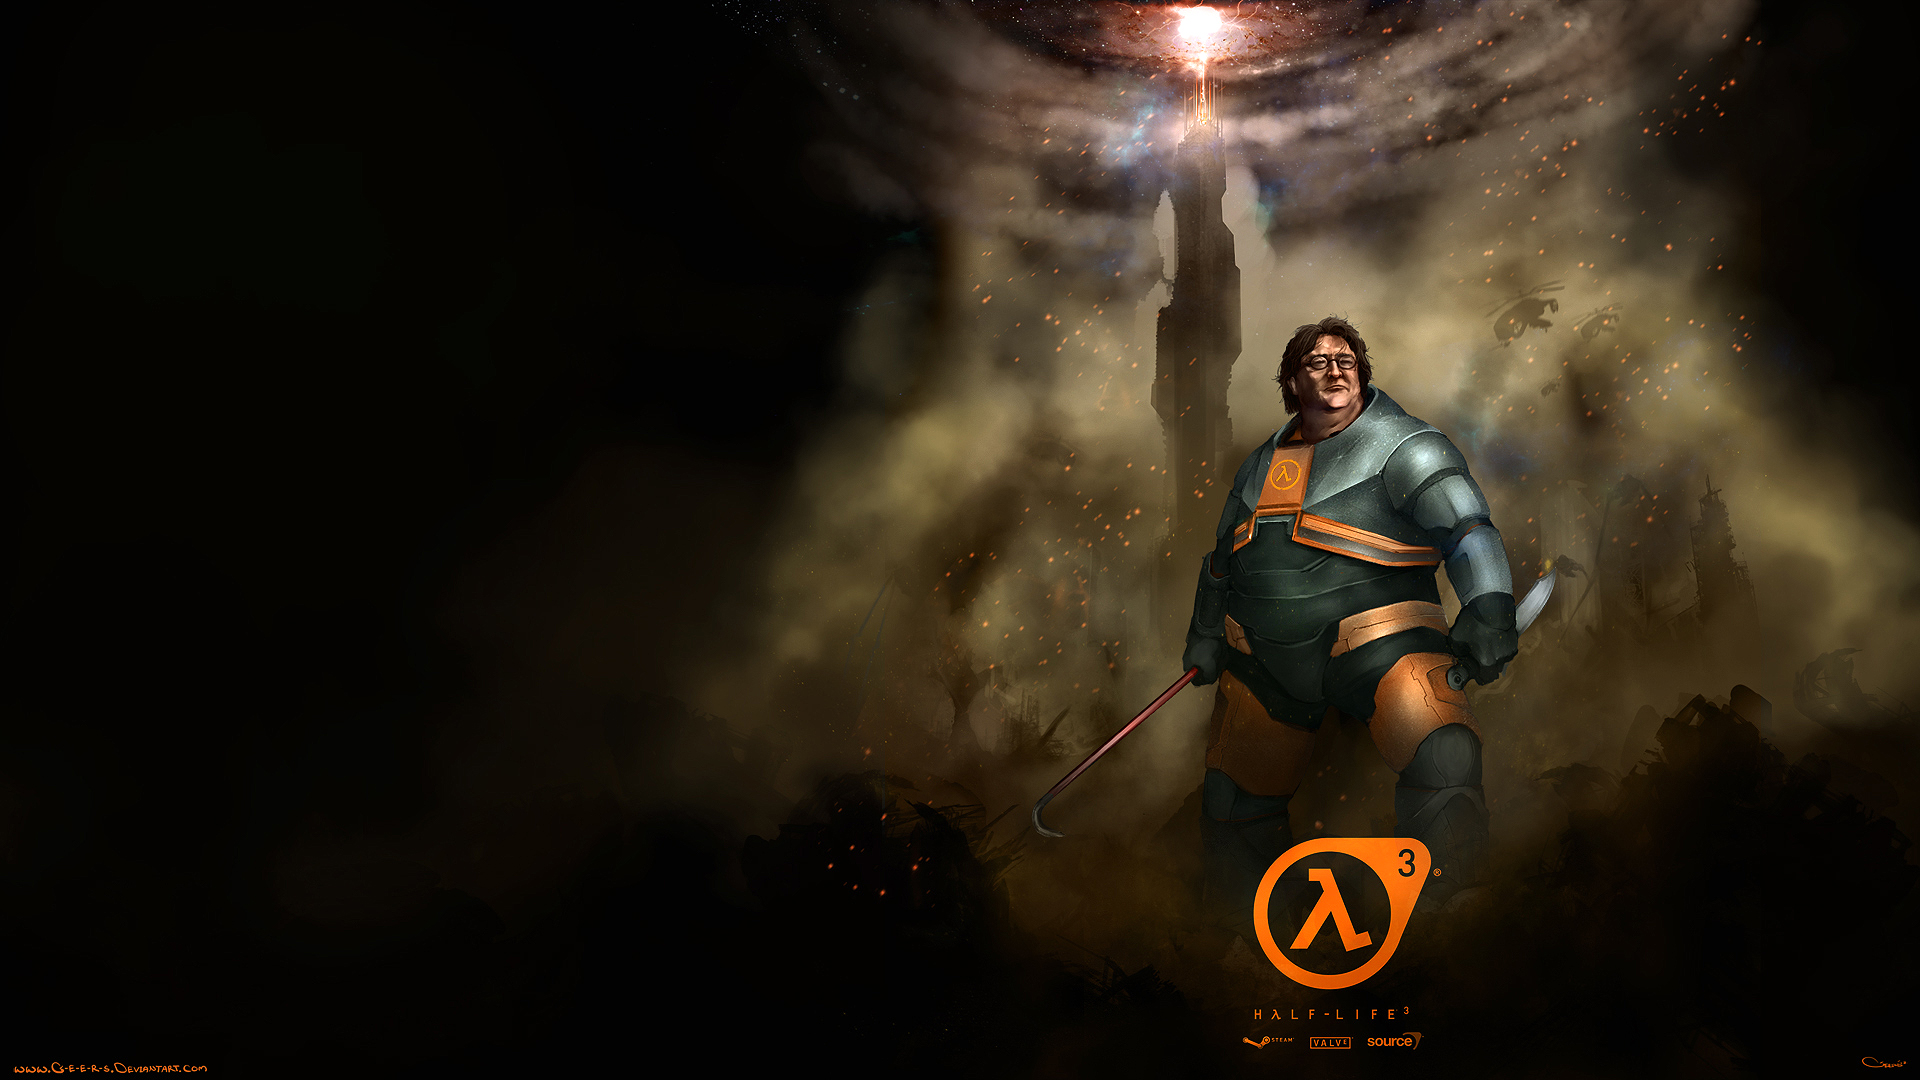 Life Gabe Newell Gaben Half Hl3 Episode Wallpaper